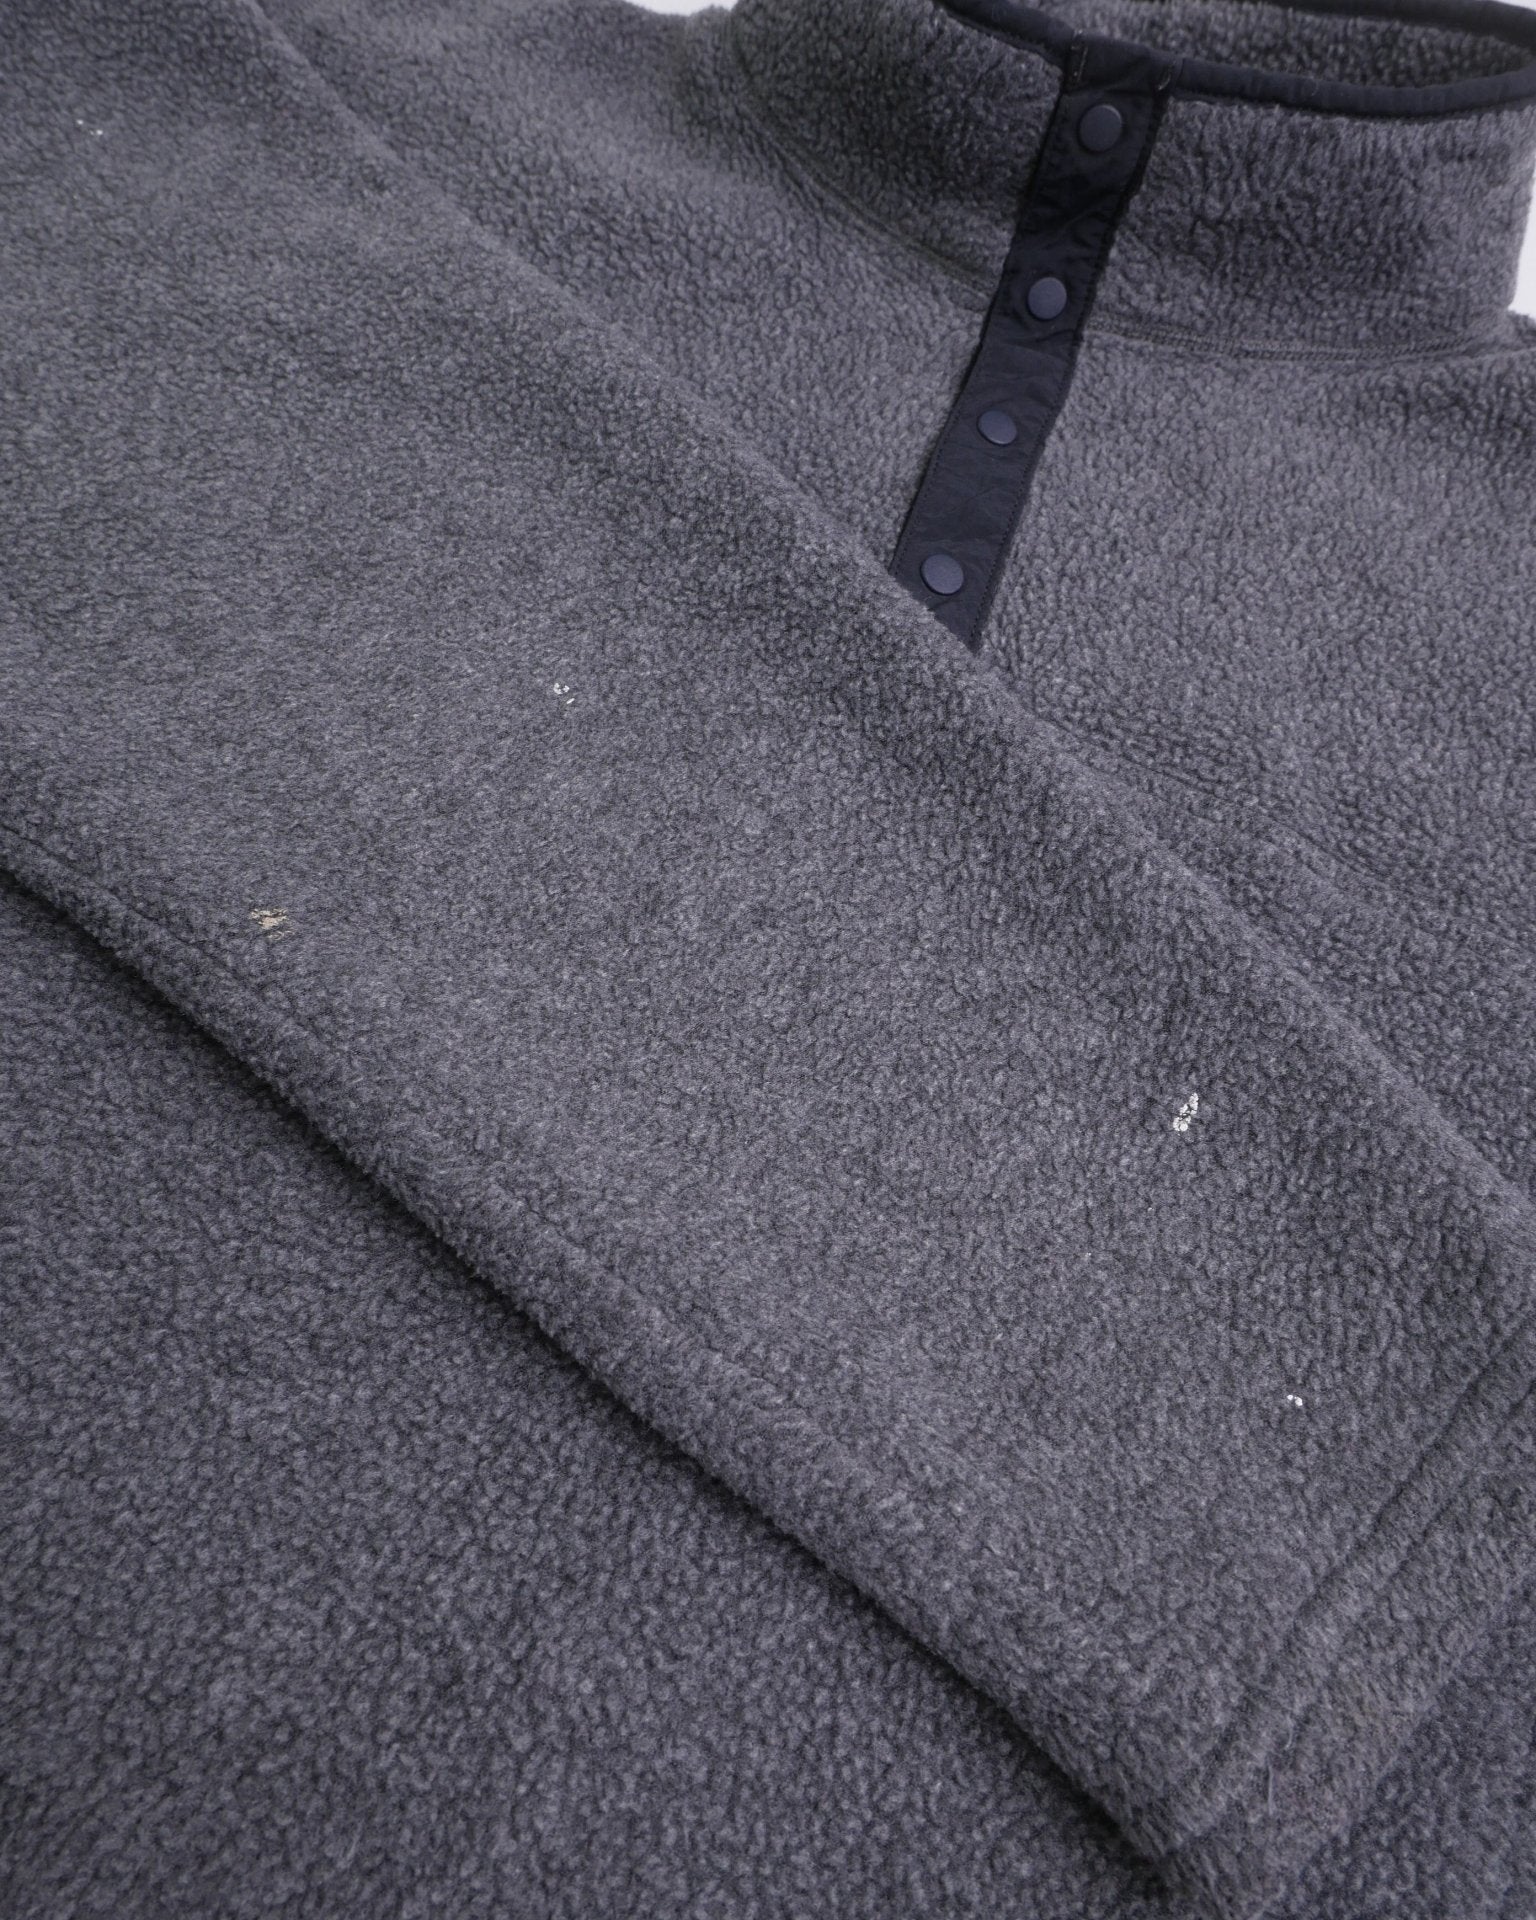 LL Bean dark grey half buttoned Fleece Sweater - Peeces